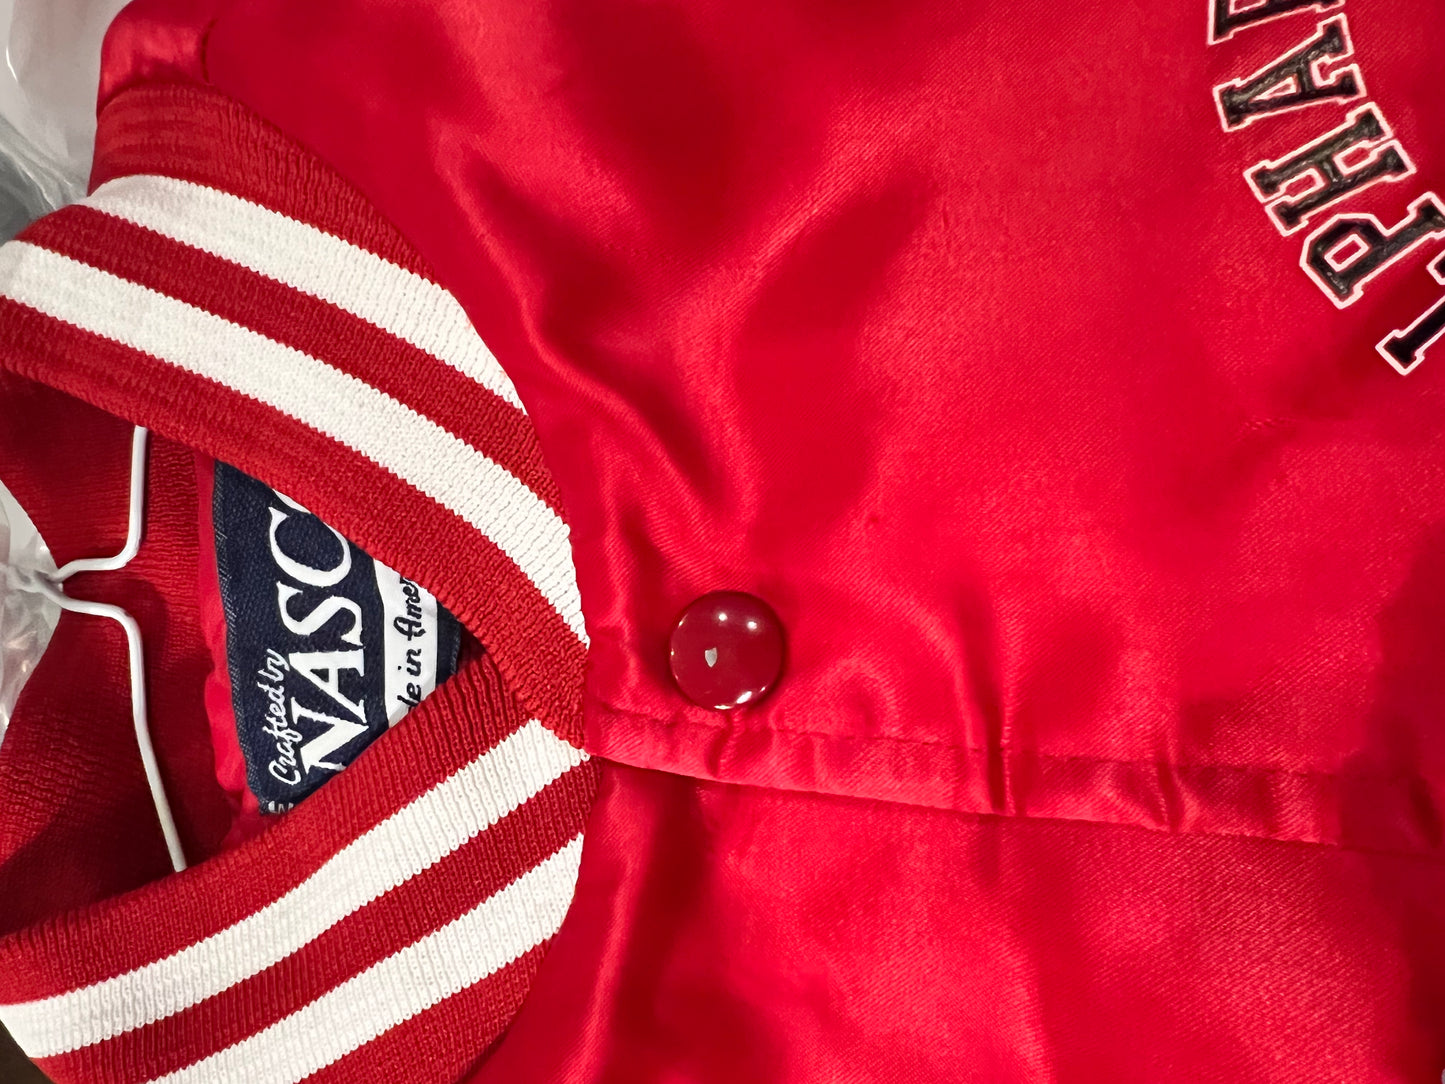 Alpharetta Football Varsity Jacket